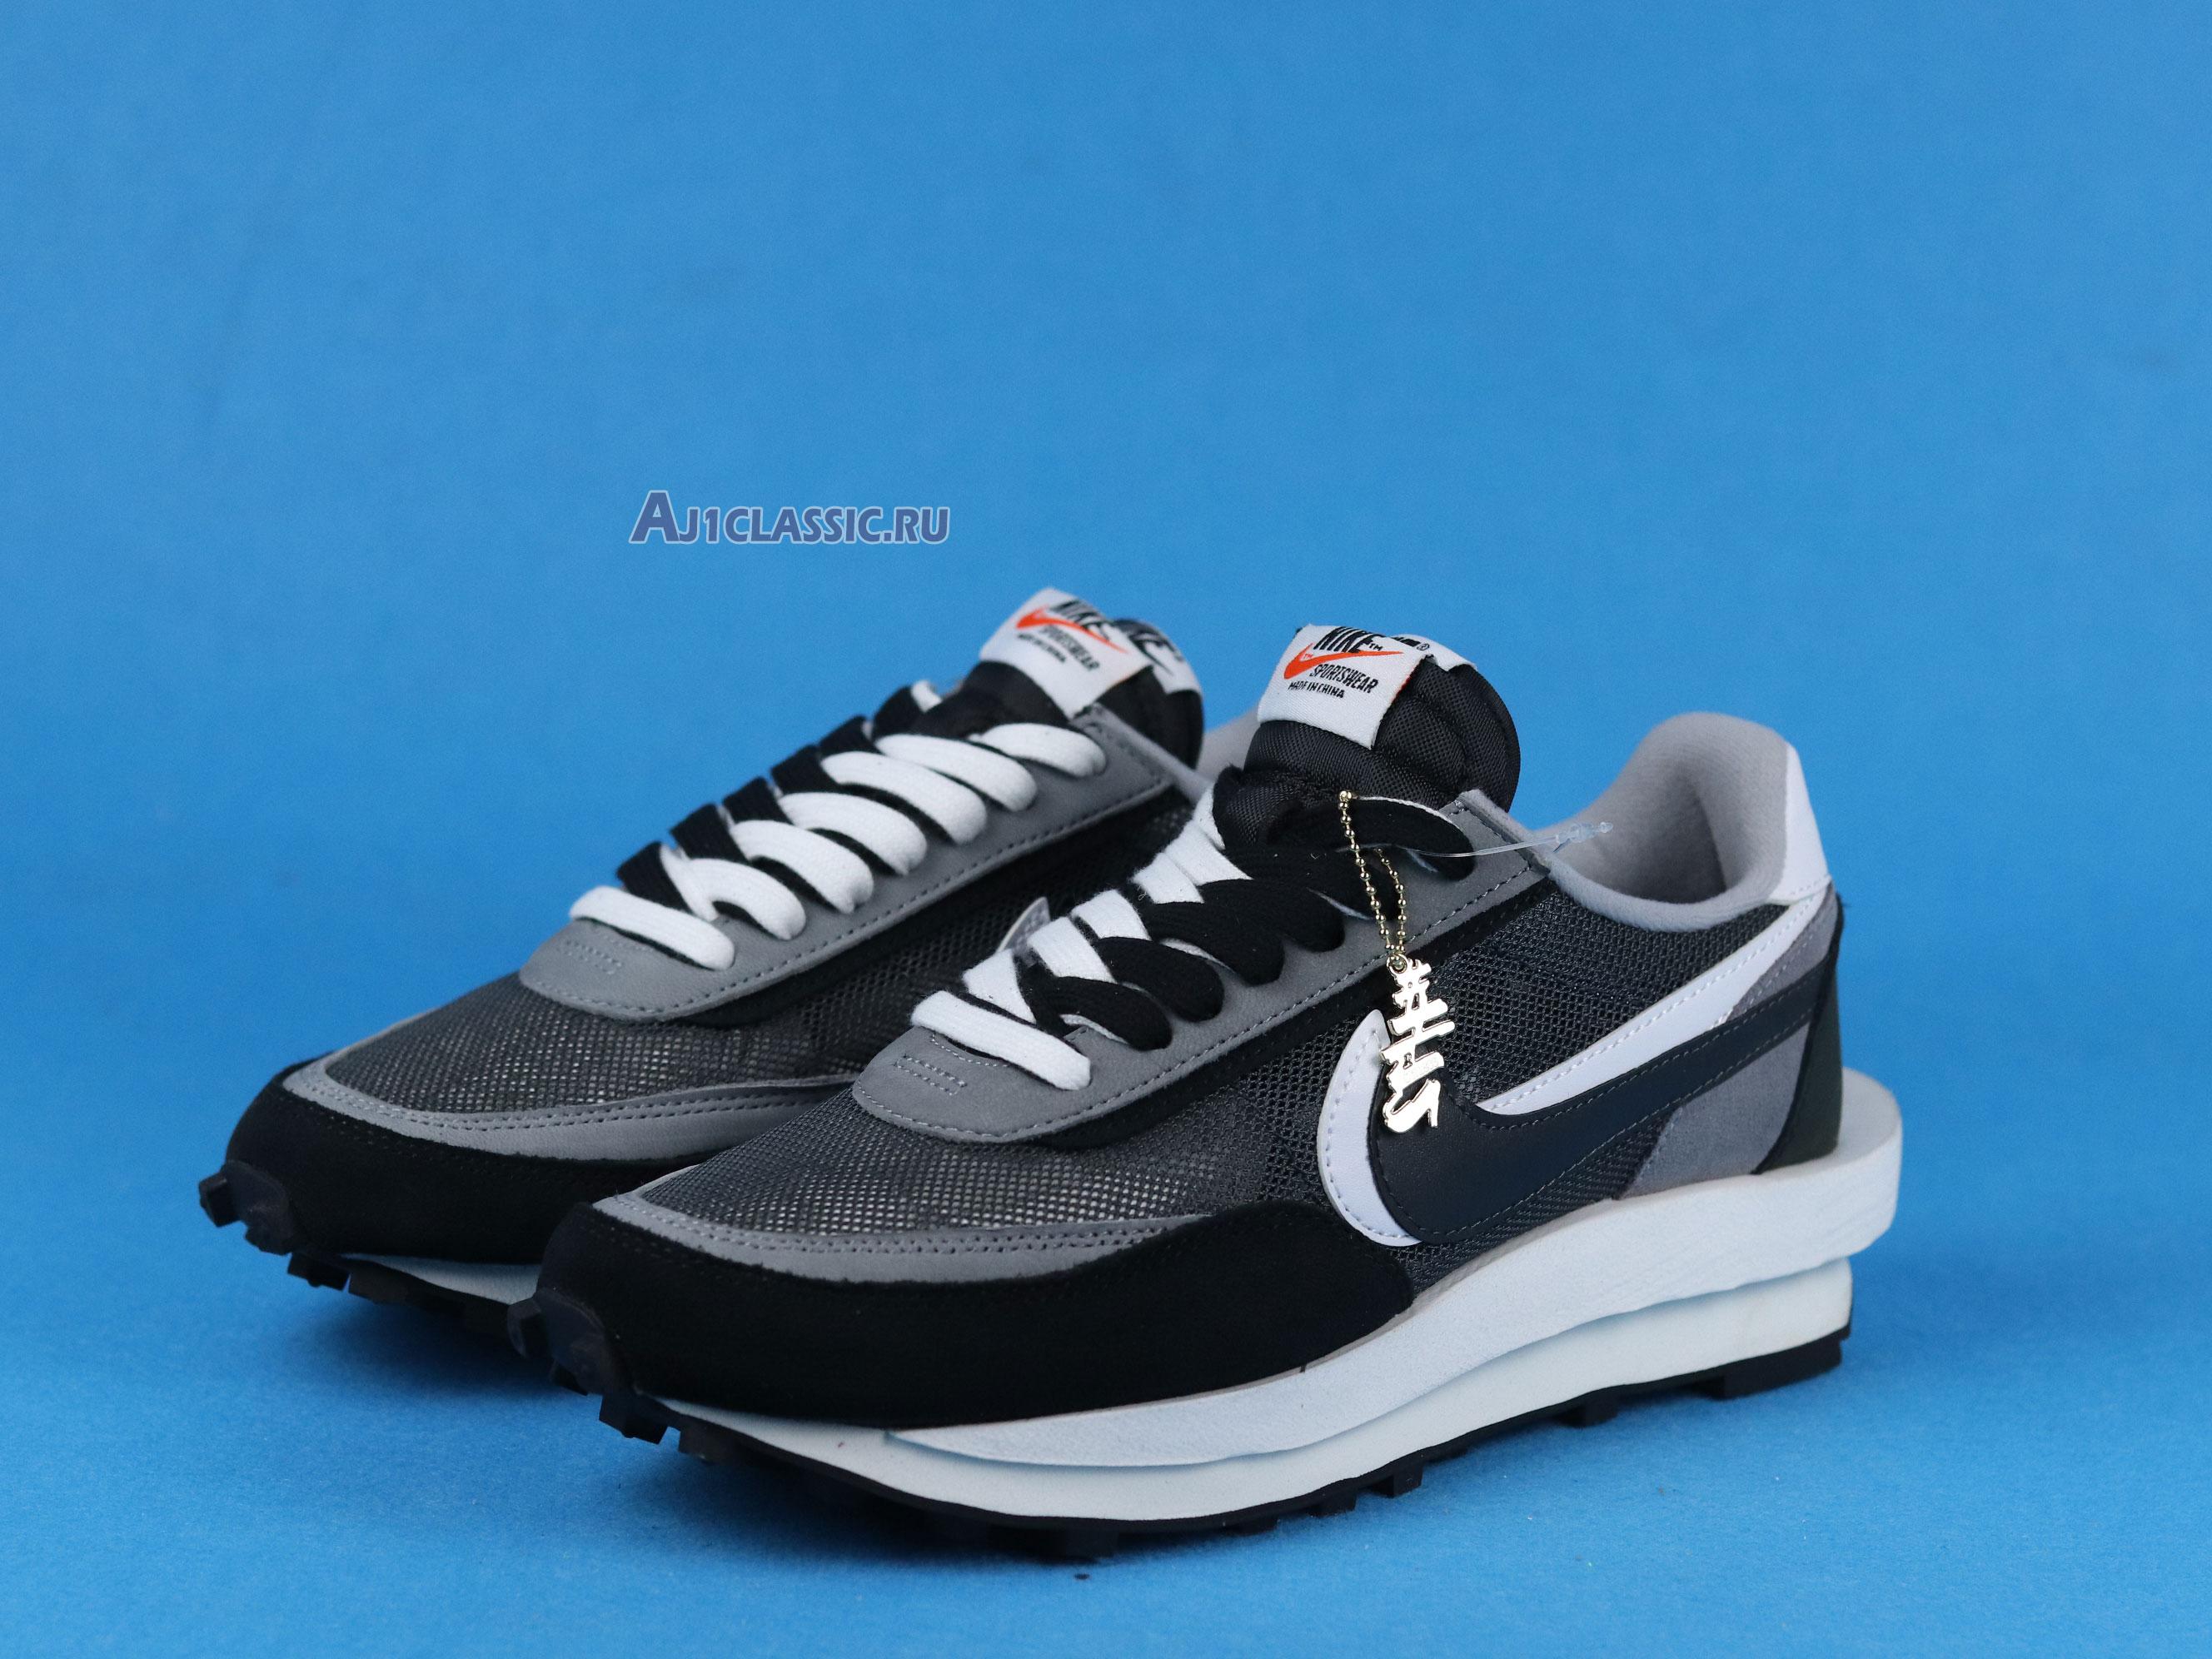 Sacai x Nike LDWaffle "Black" BV0073-001